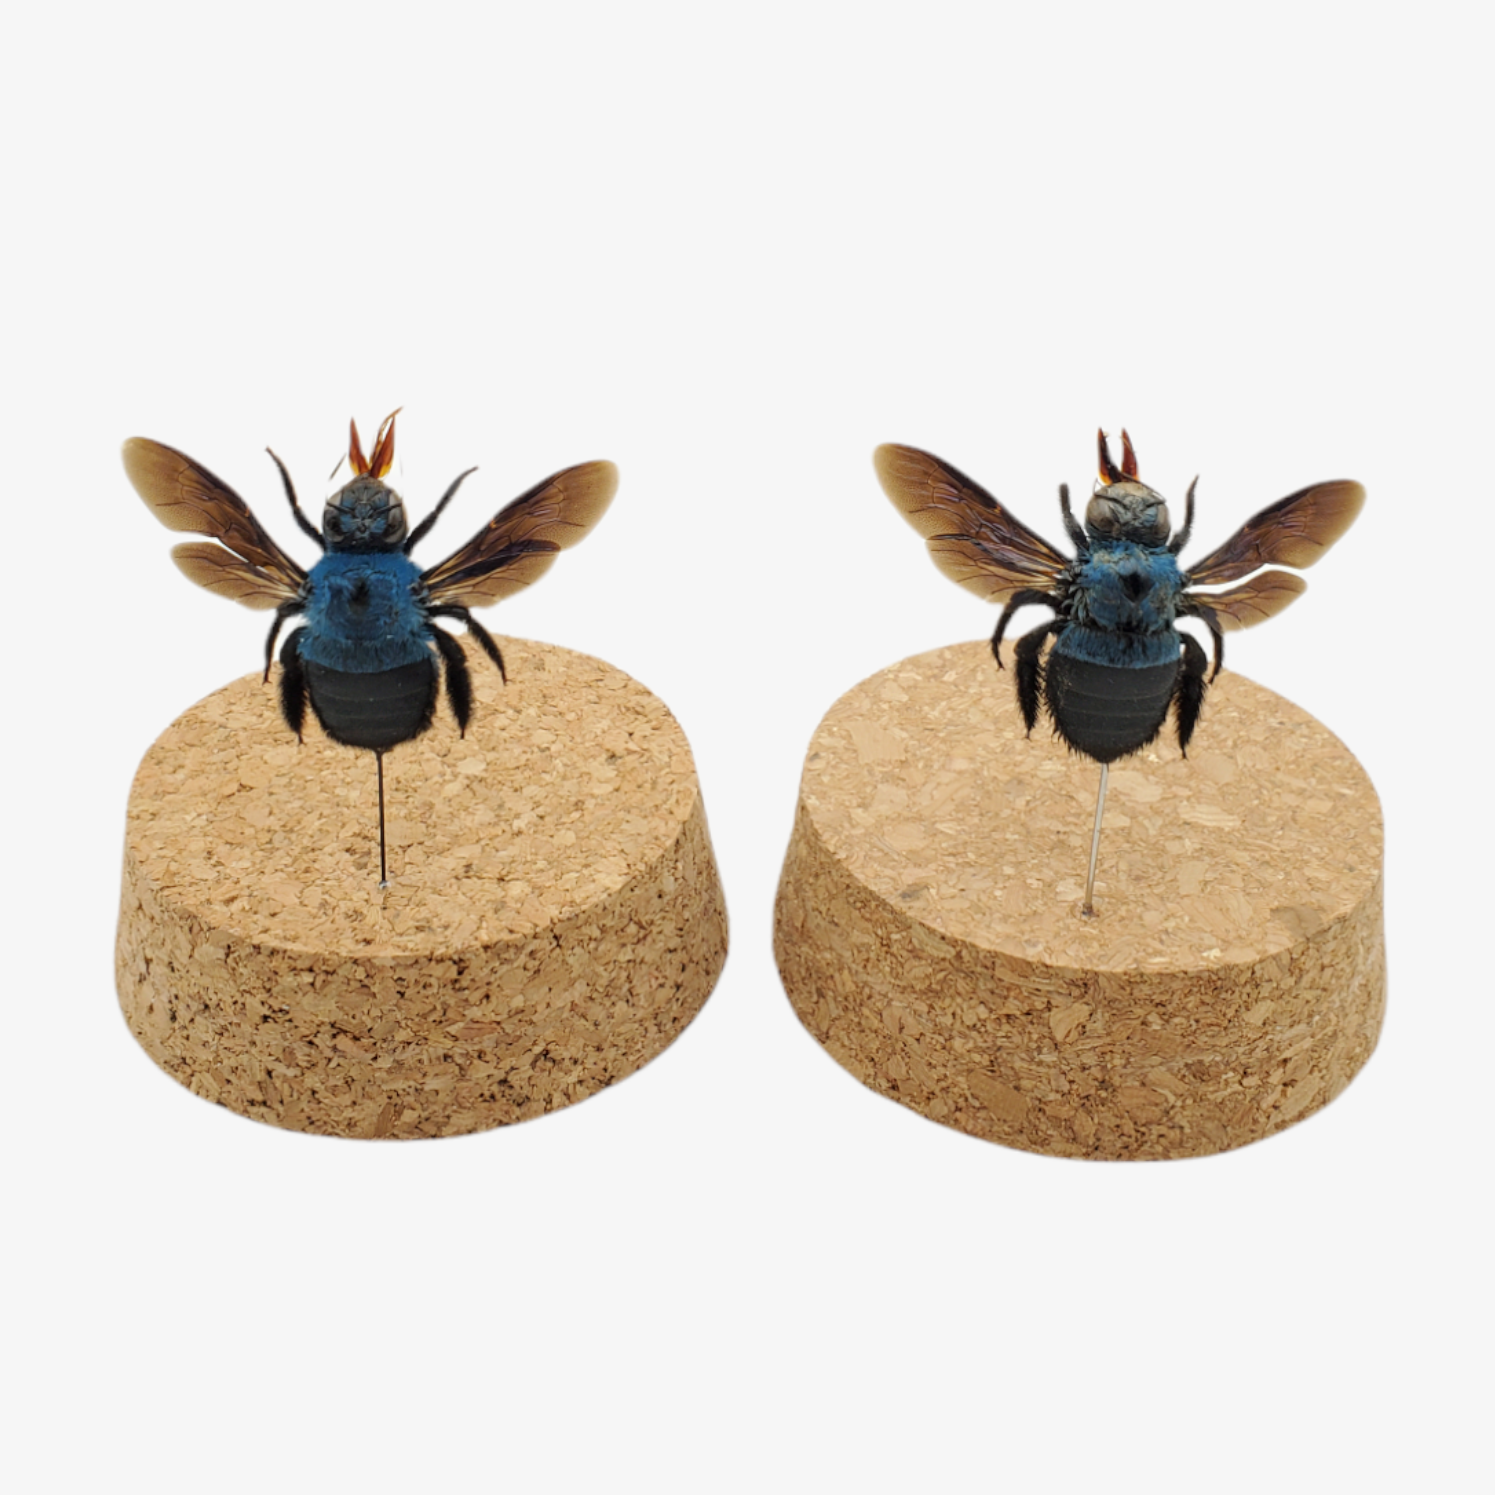 Blue Carpenter Bee